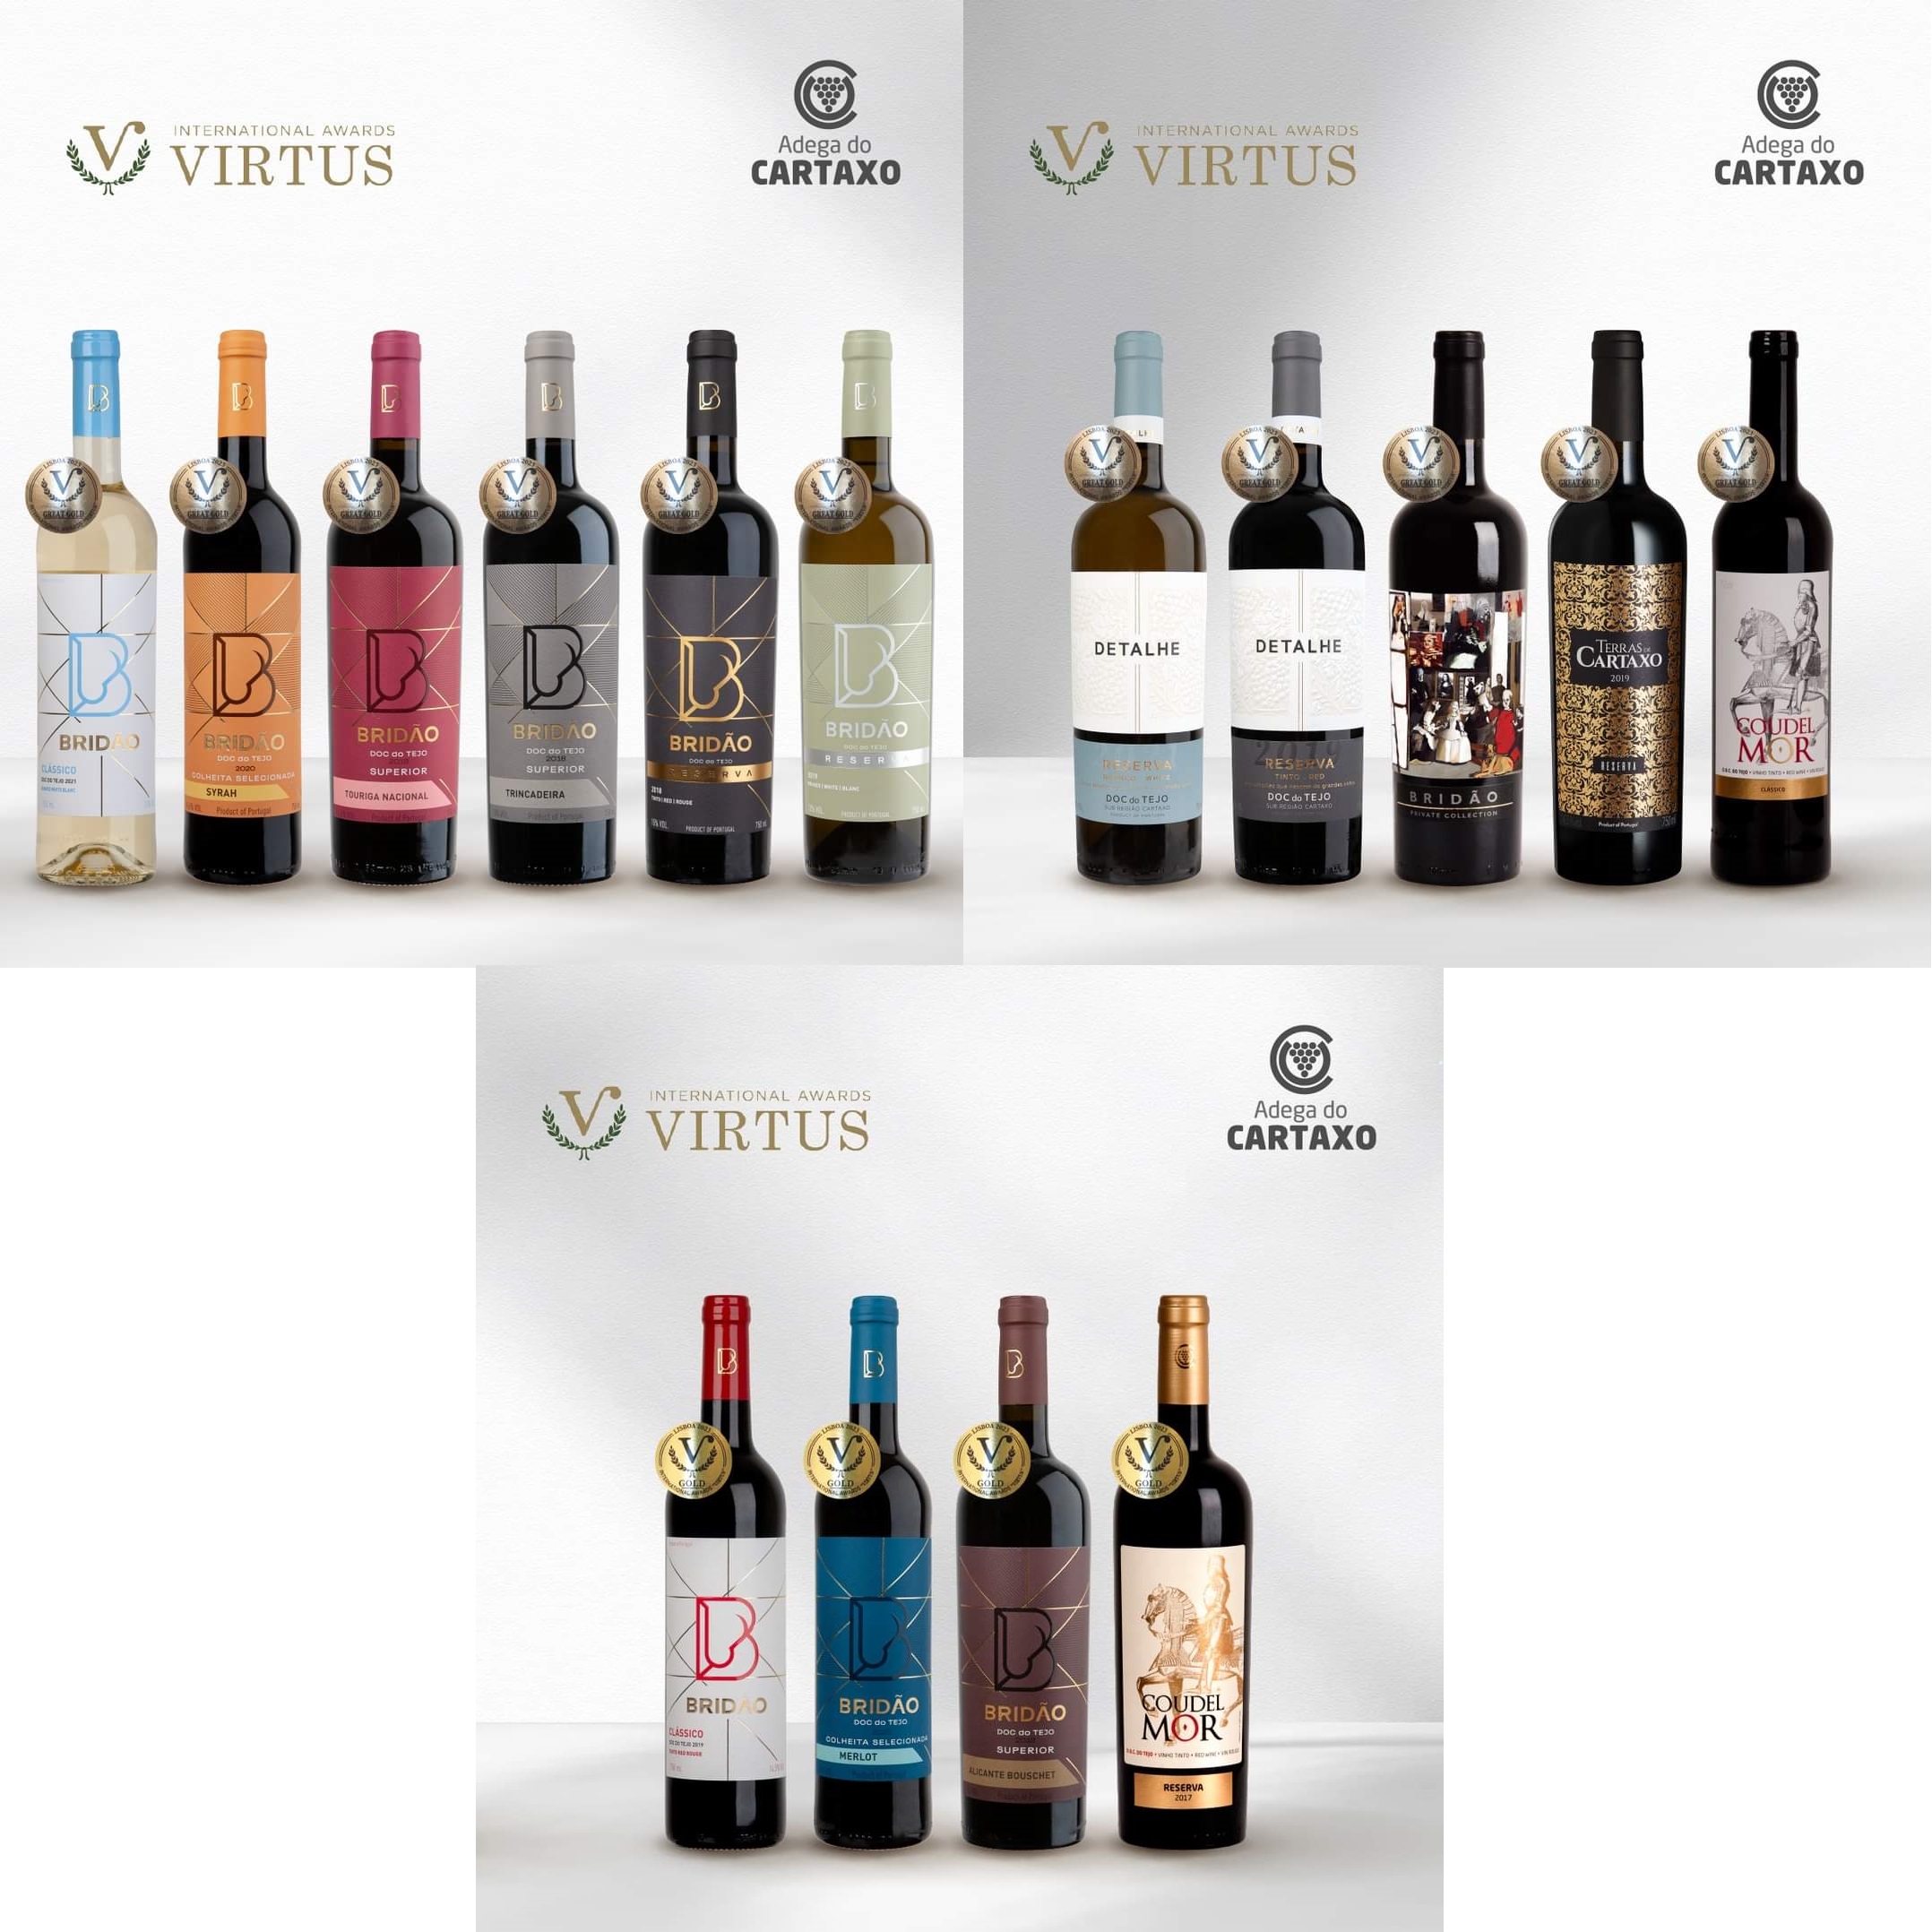 15 wines distinguished at the International Virtus Awards